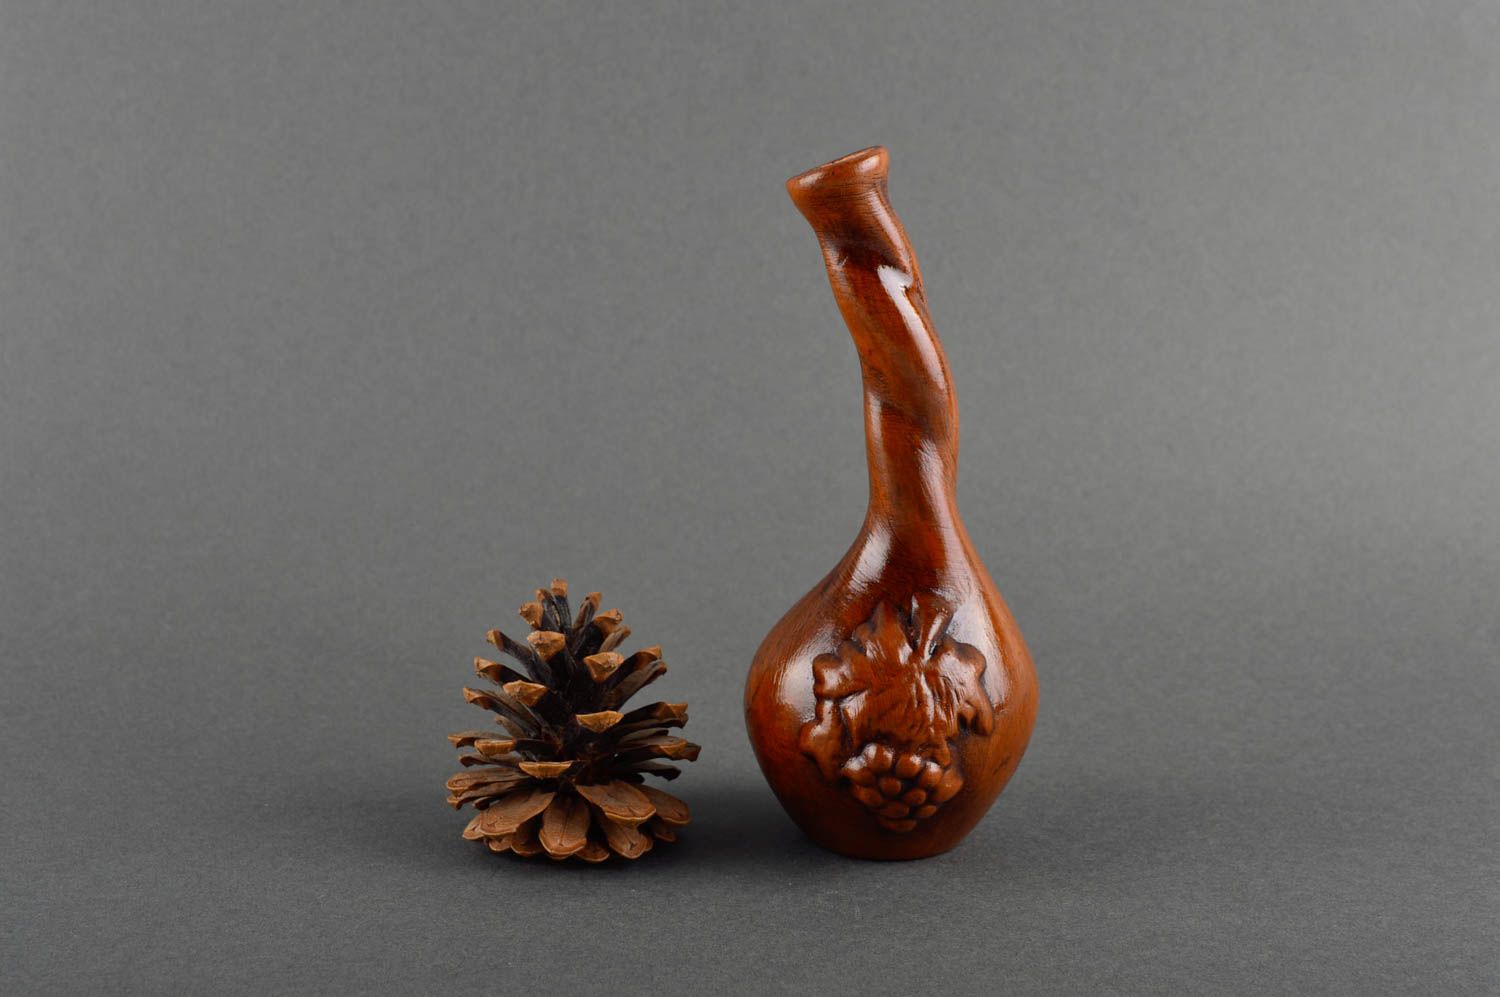 10 oz ceramic handmade wine decanter in classic brown color 6 inches, 0,25 lb photo 1